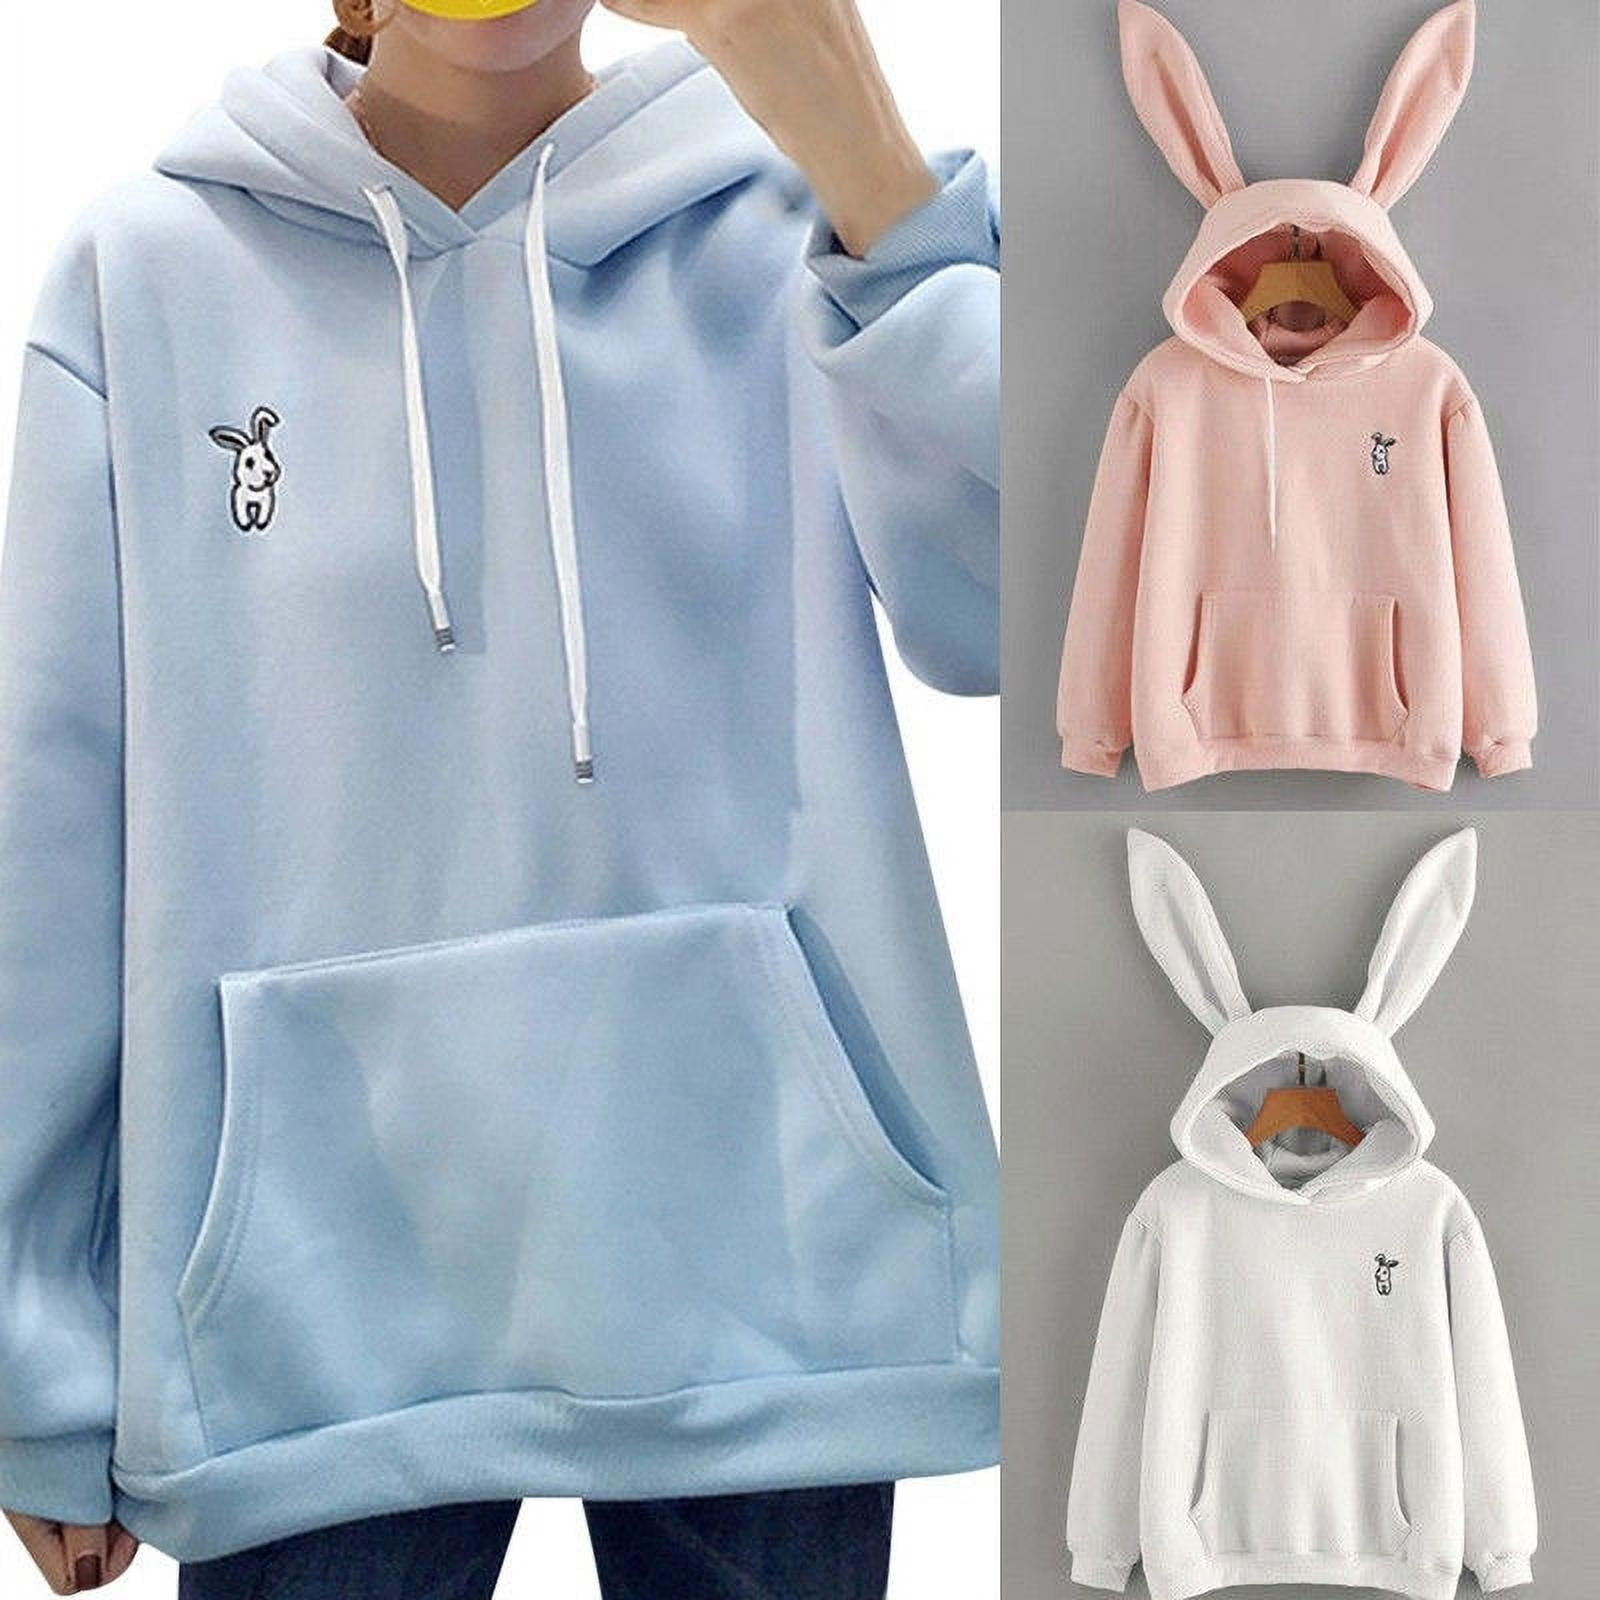 Camidy Baby Girl Long Sleeve Hoodie Rabbit Ear Hooded Tops Sweatshirt Outwear Clothes 